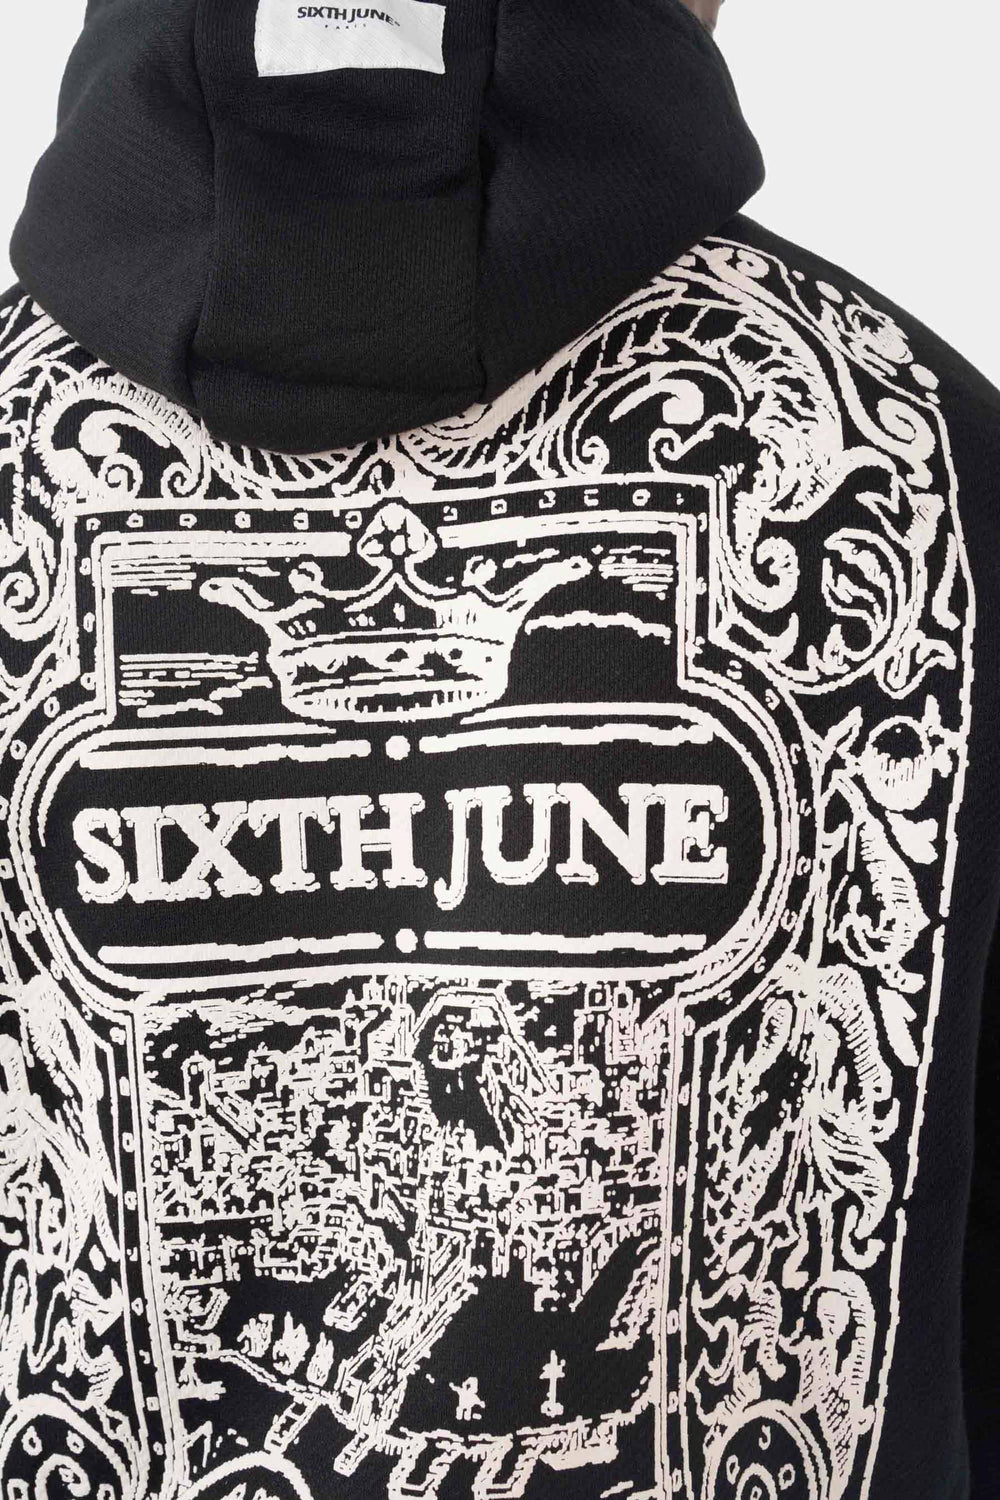 Sweatshirts and Knitwear for Men - Shop on SixthJune.com – Sixth June